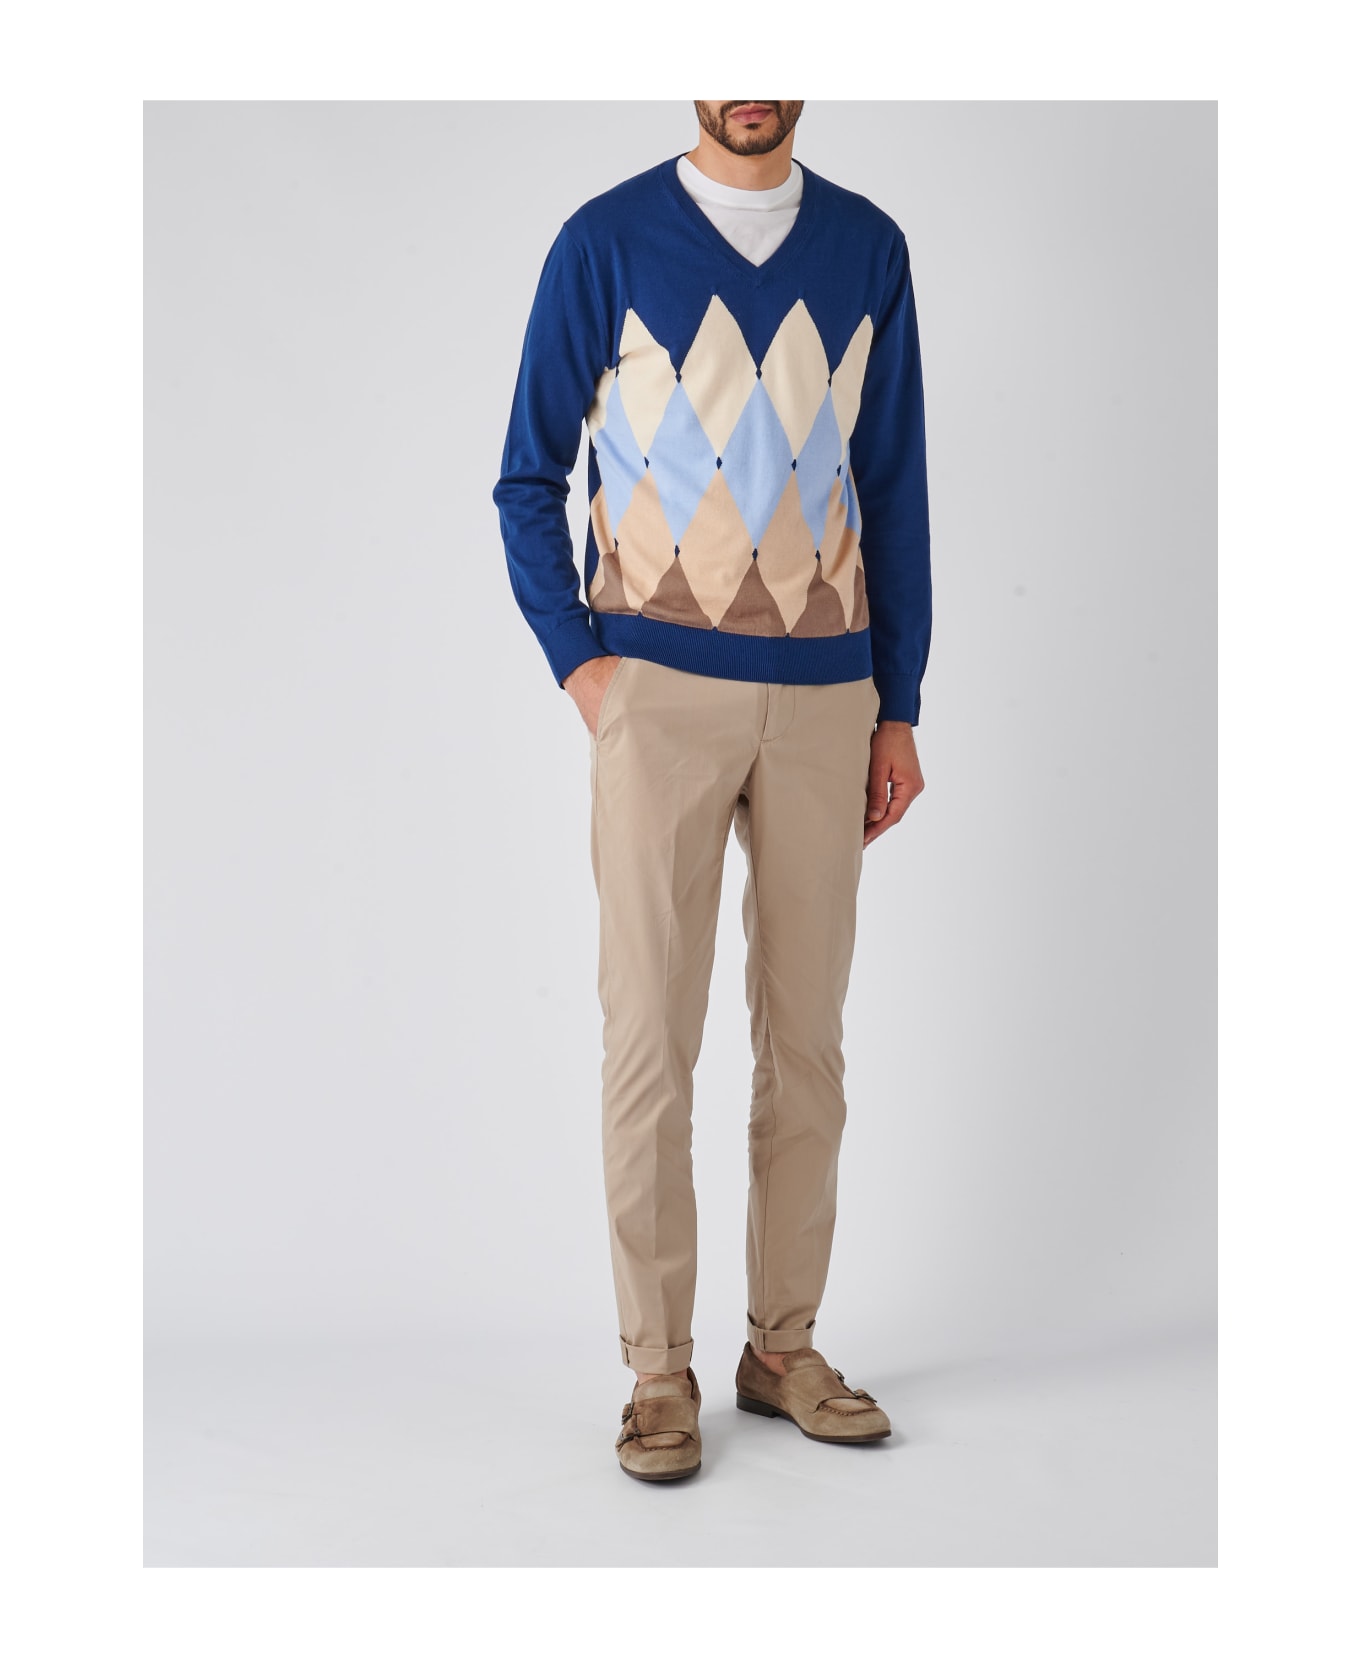 Ballantyne V Neck Pullover Sweater - BLU ROYAL